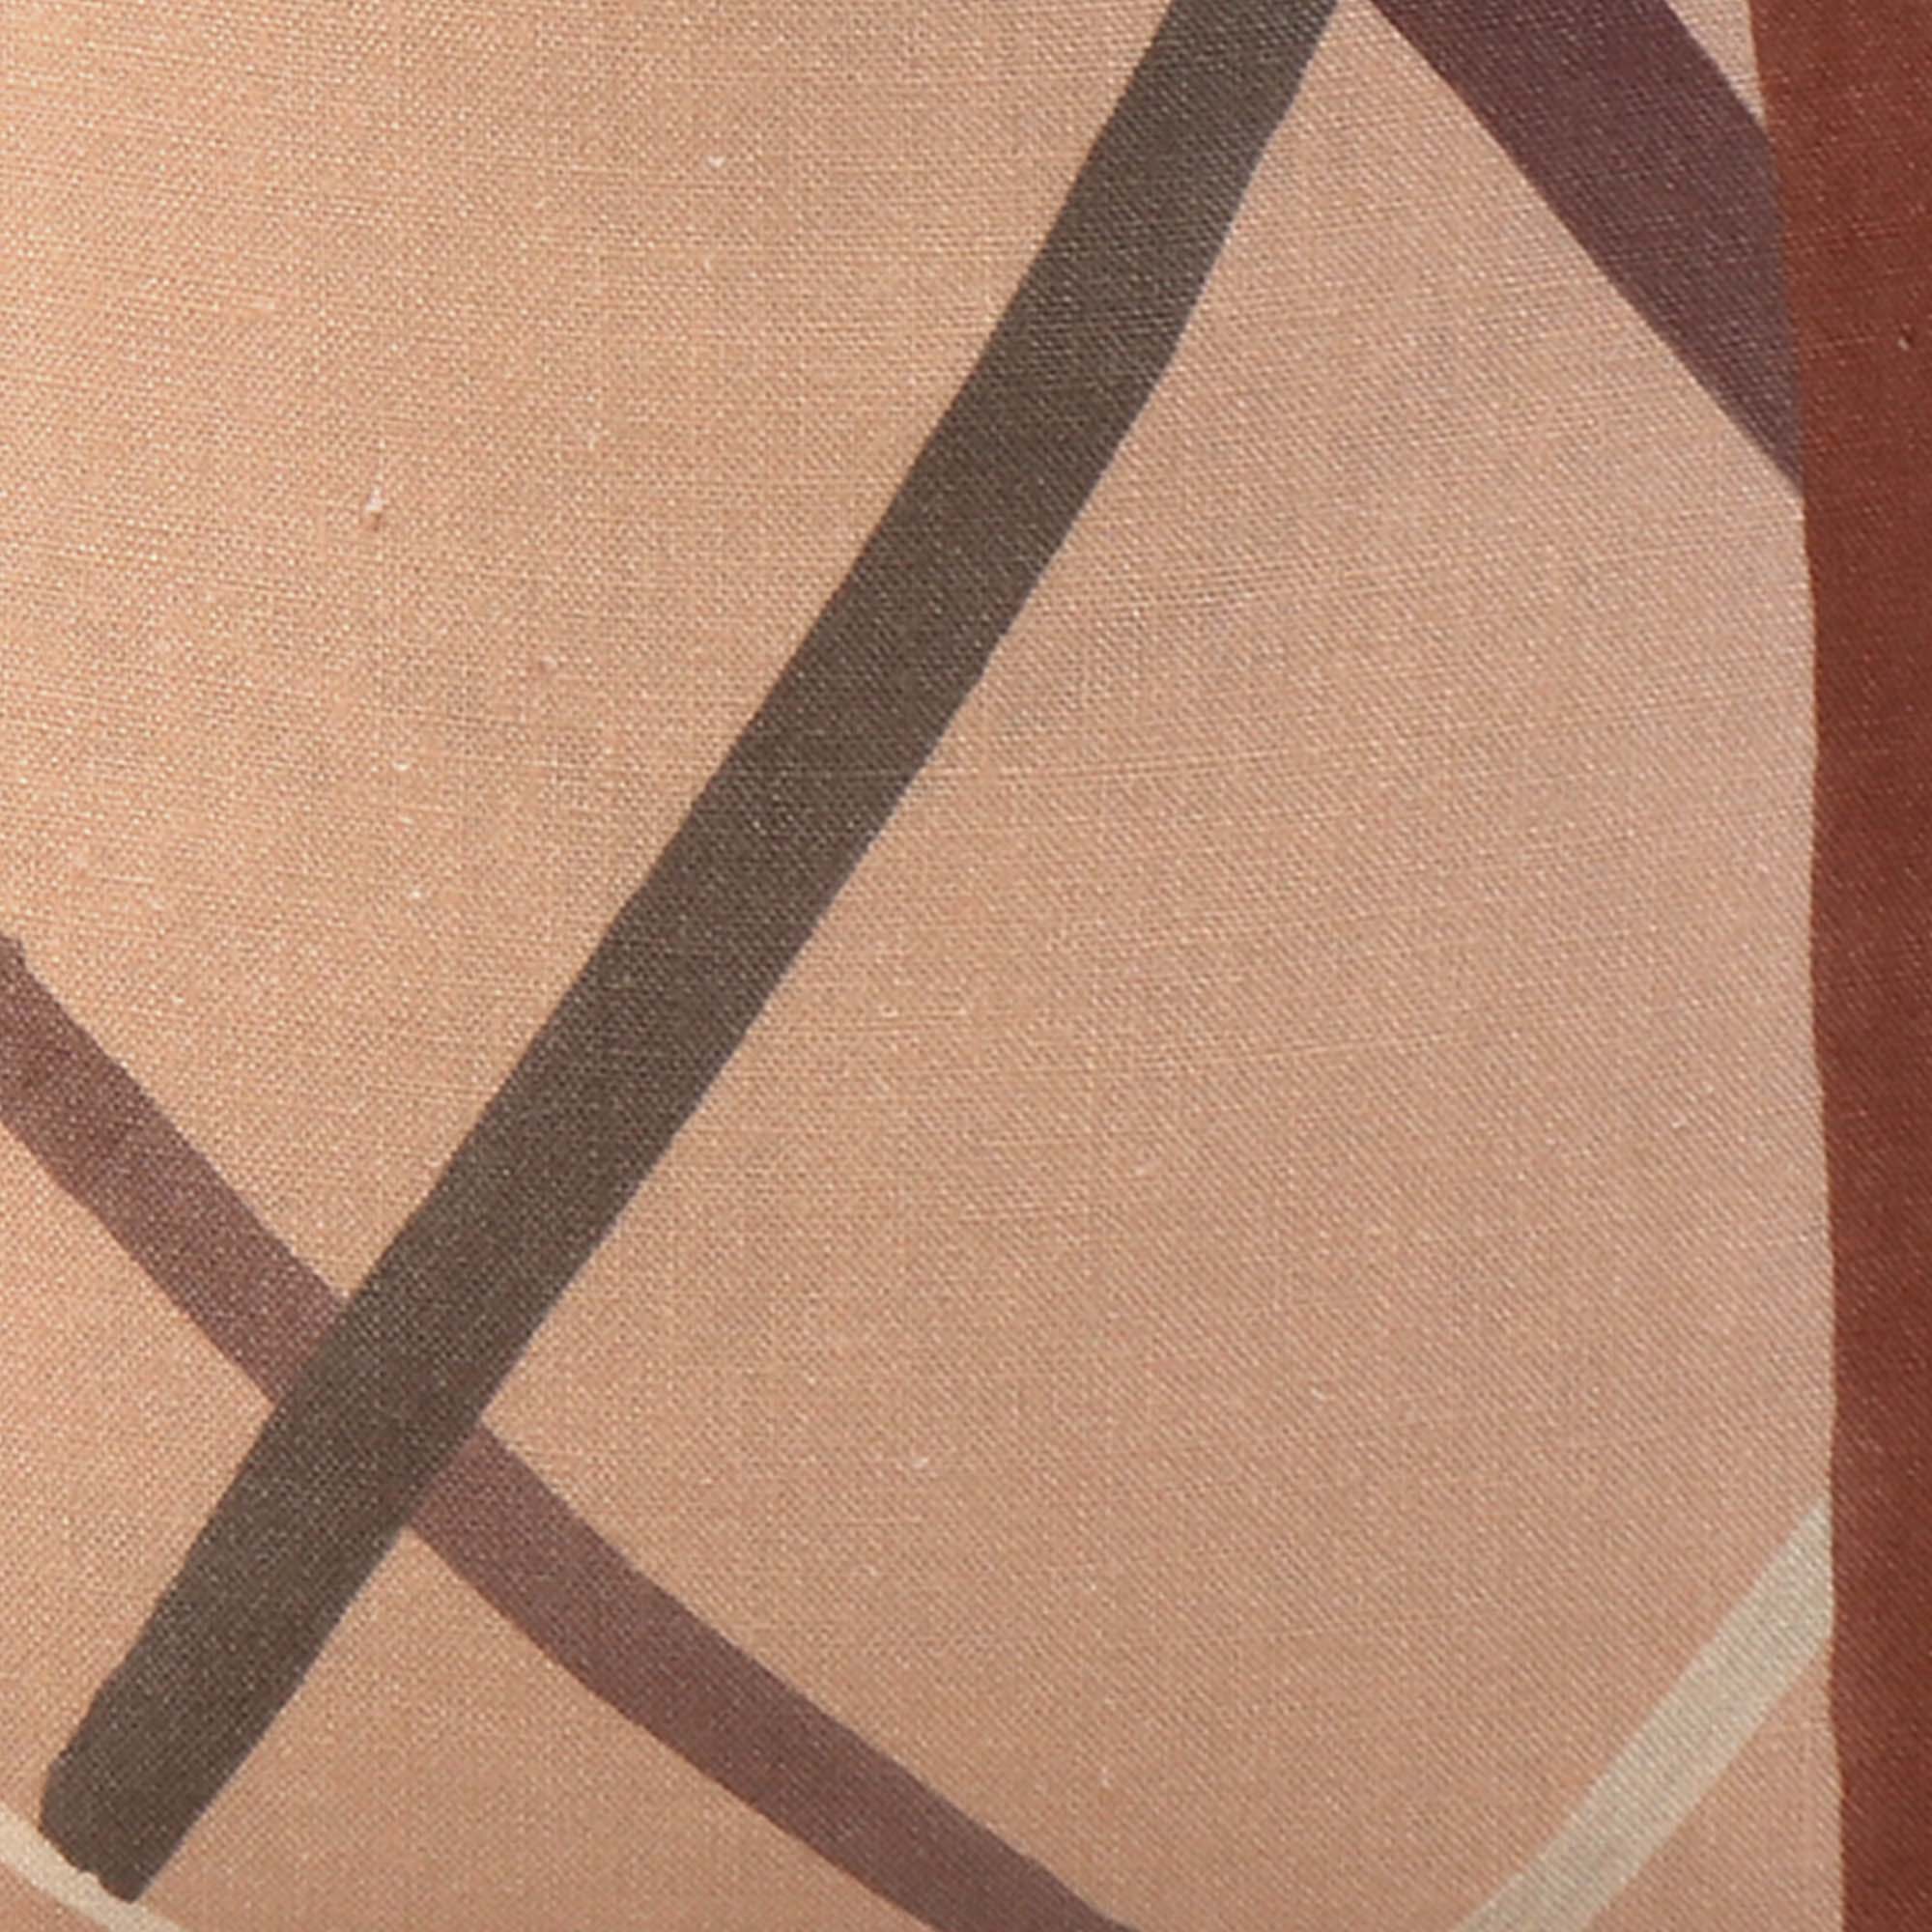 Simpatico Terracotta / 4x4 inch Fabric Swatch